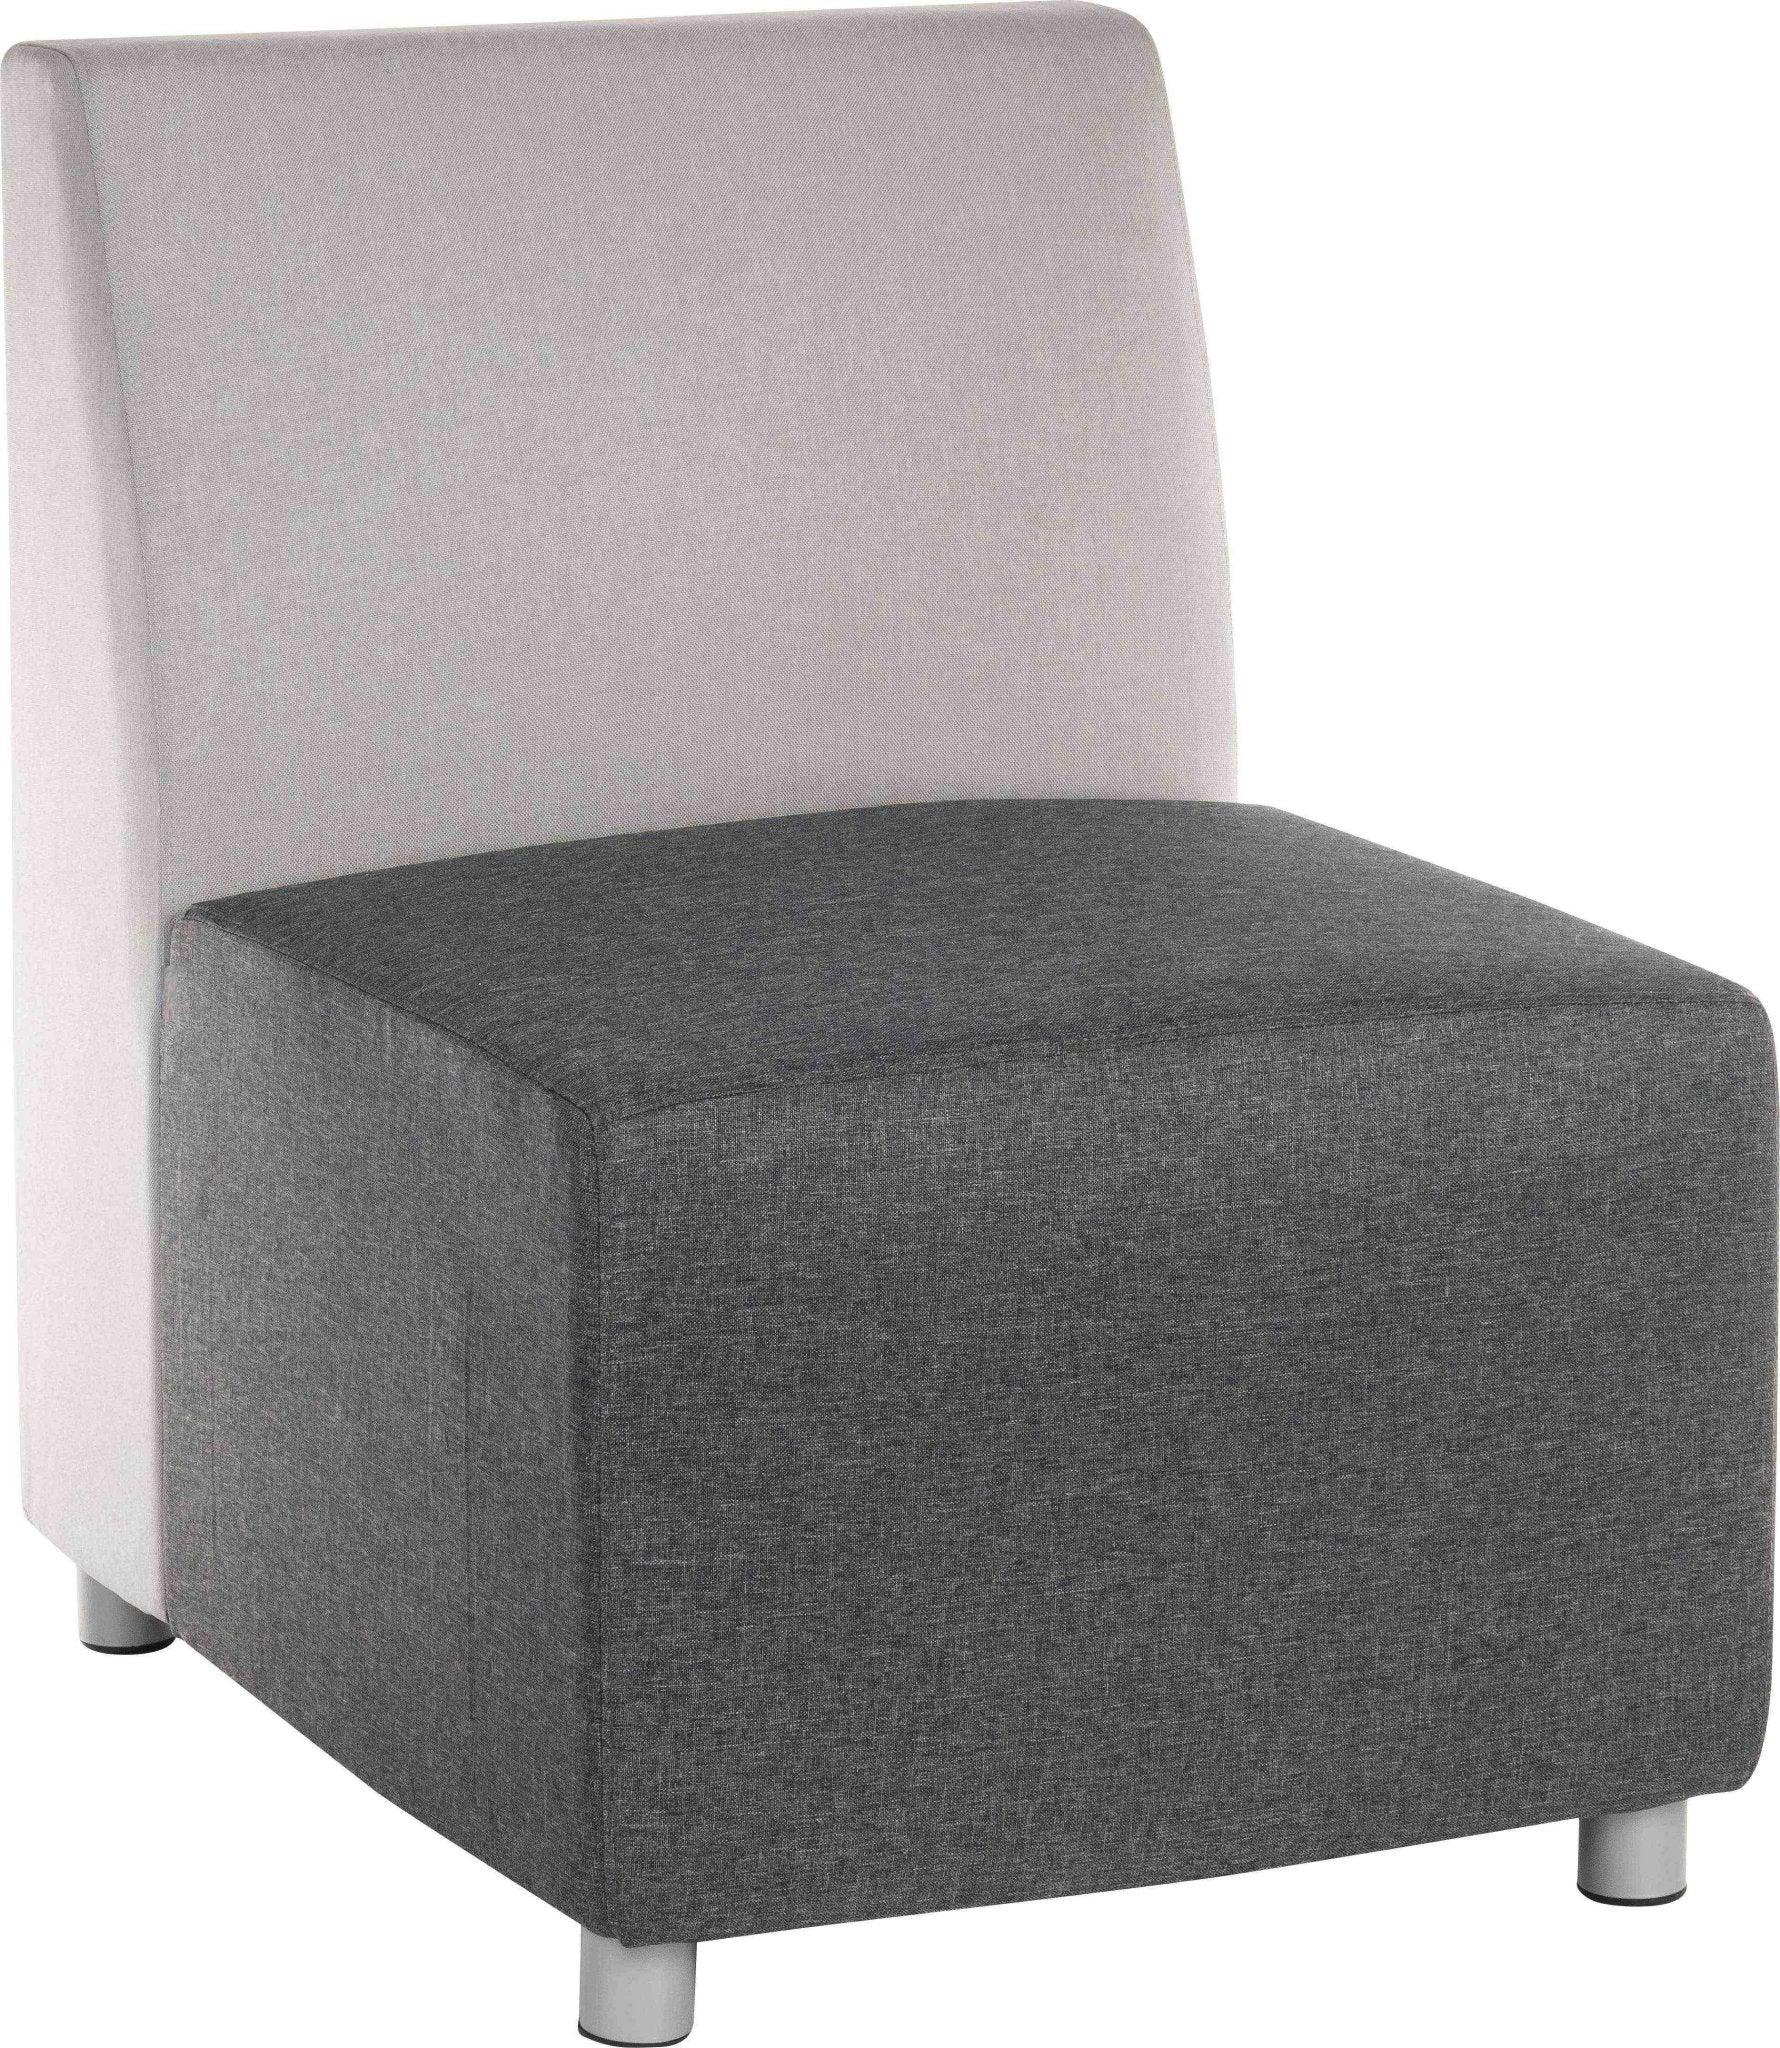 Cube modular reception chair base - image 1